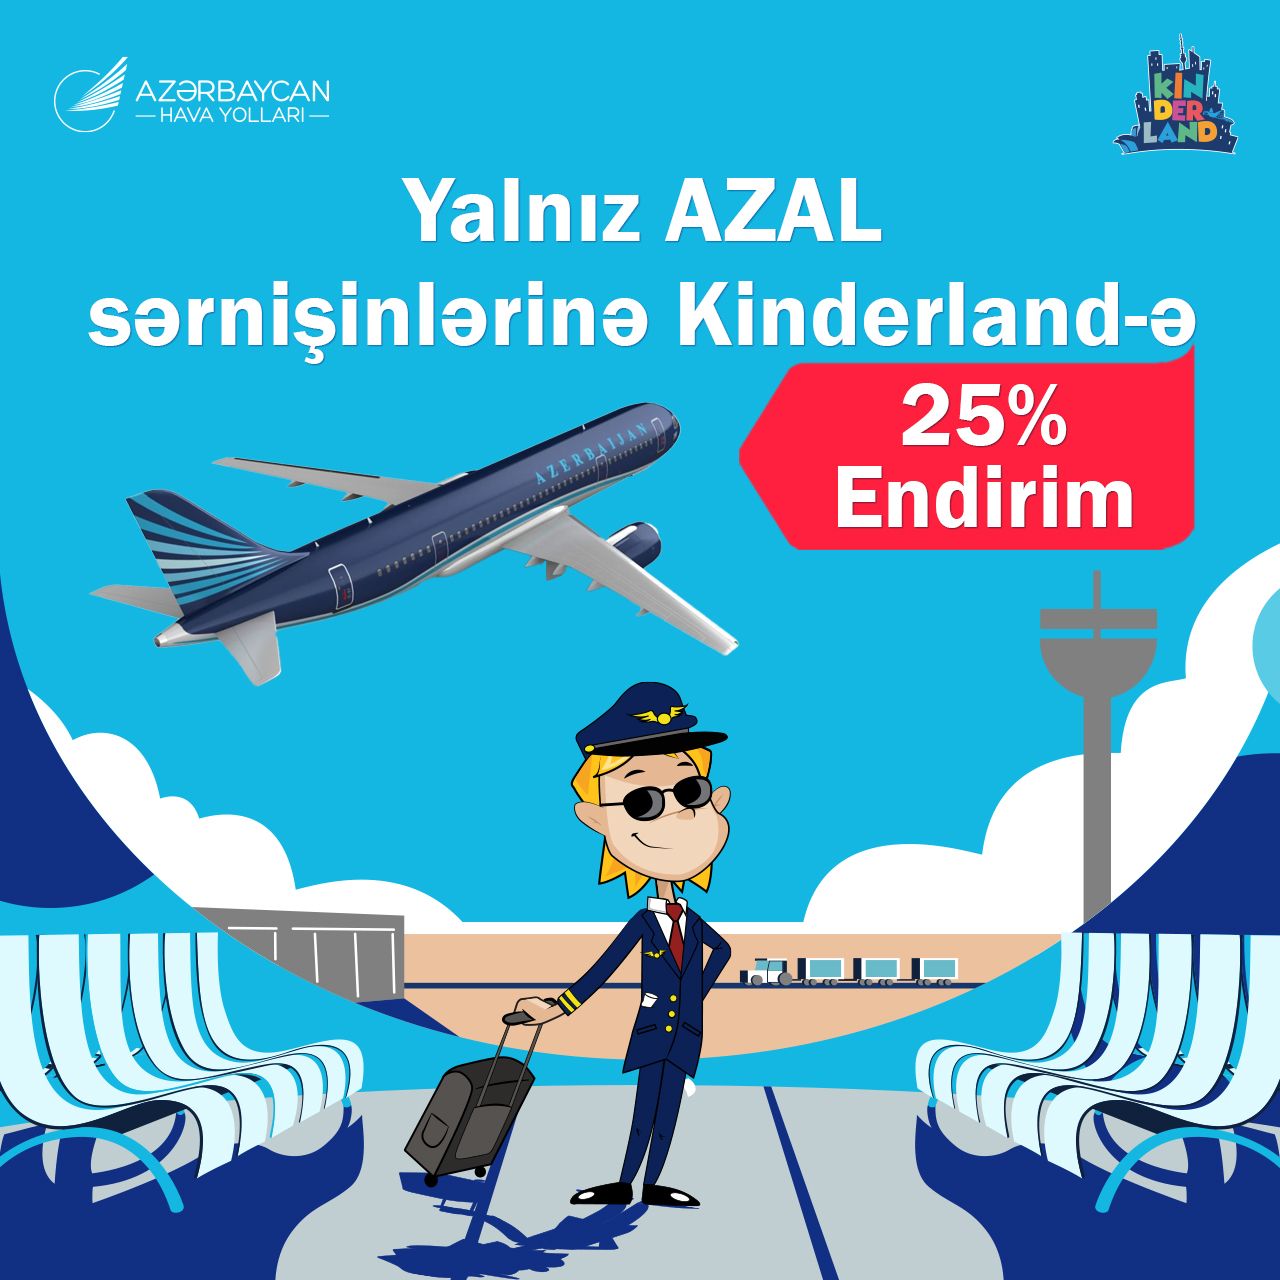 25% Discount to Kinderland for AZAL passengers